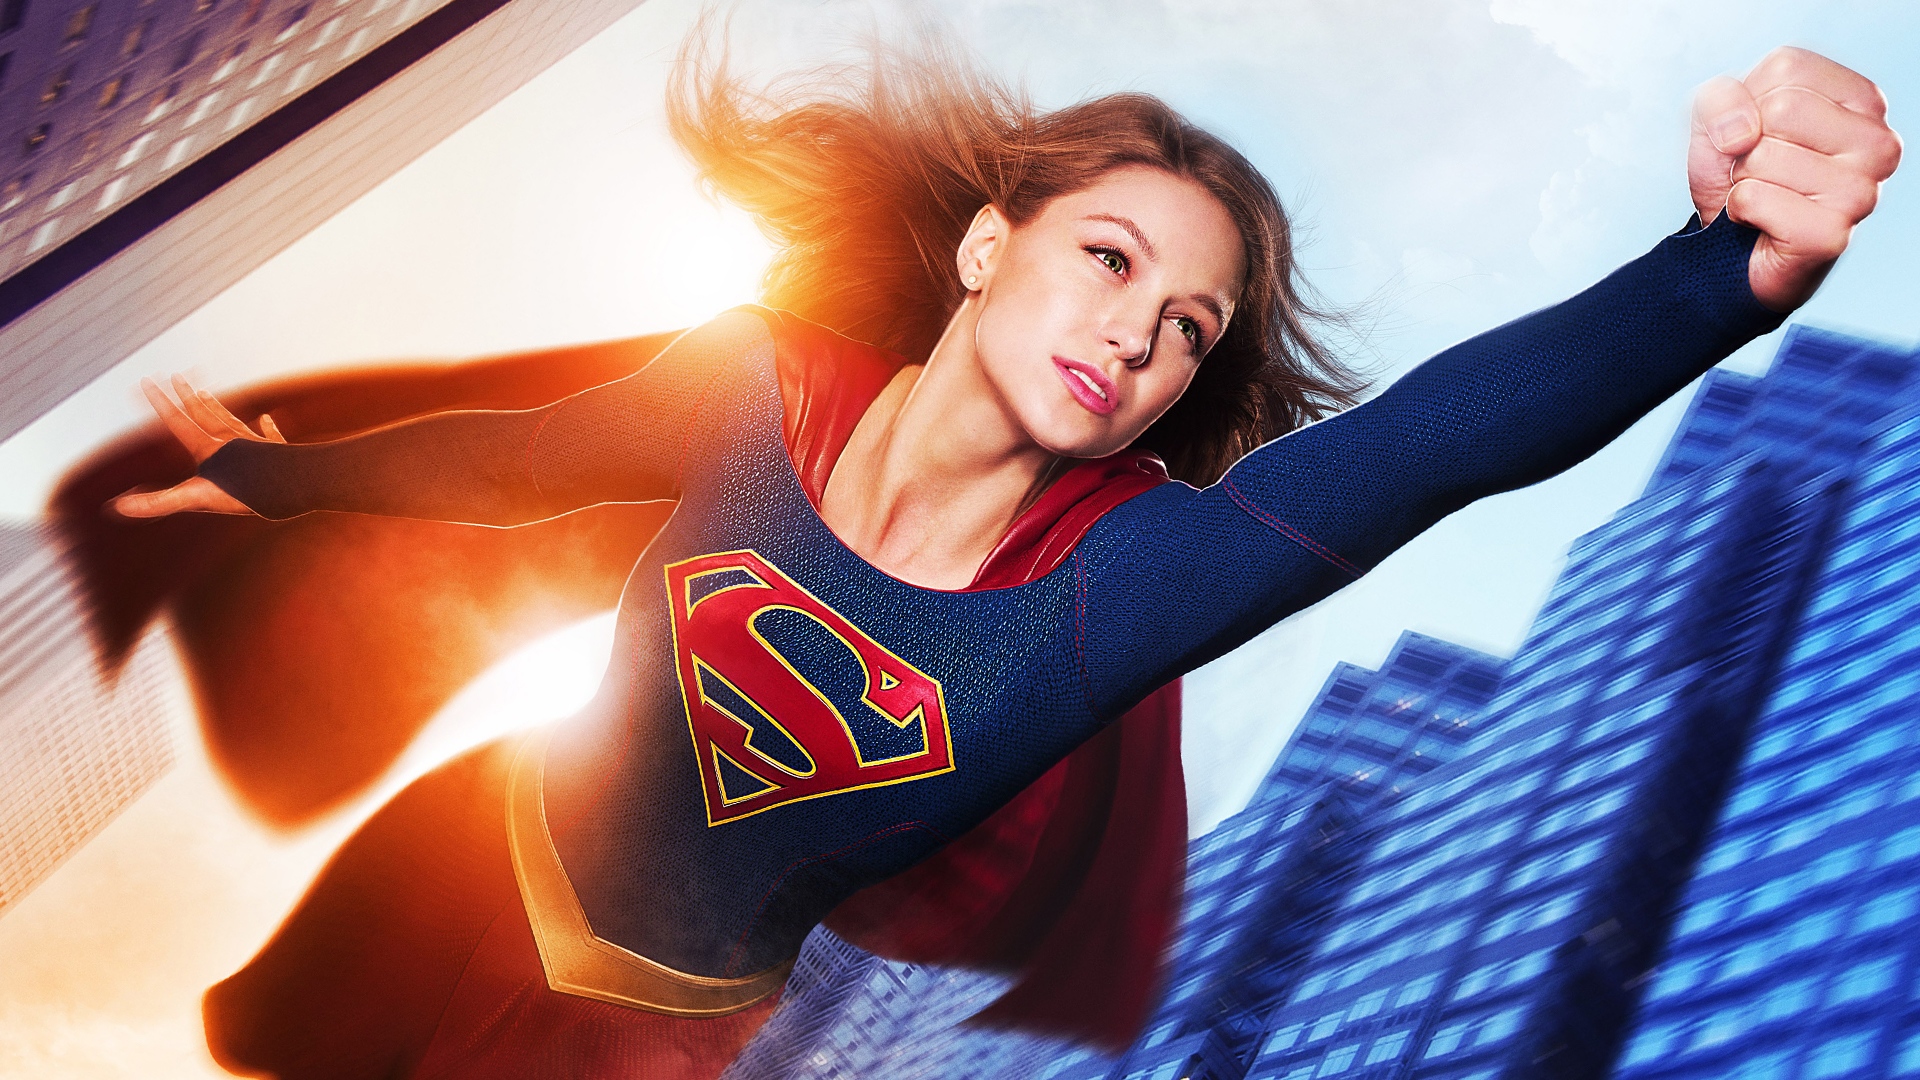 Supergirl Series wallpaper HD. Free desktop background 2016 in ...